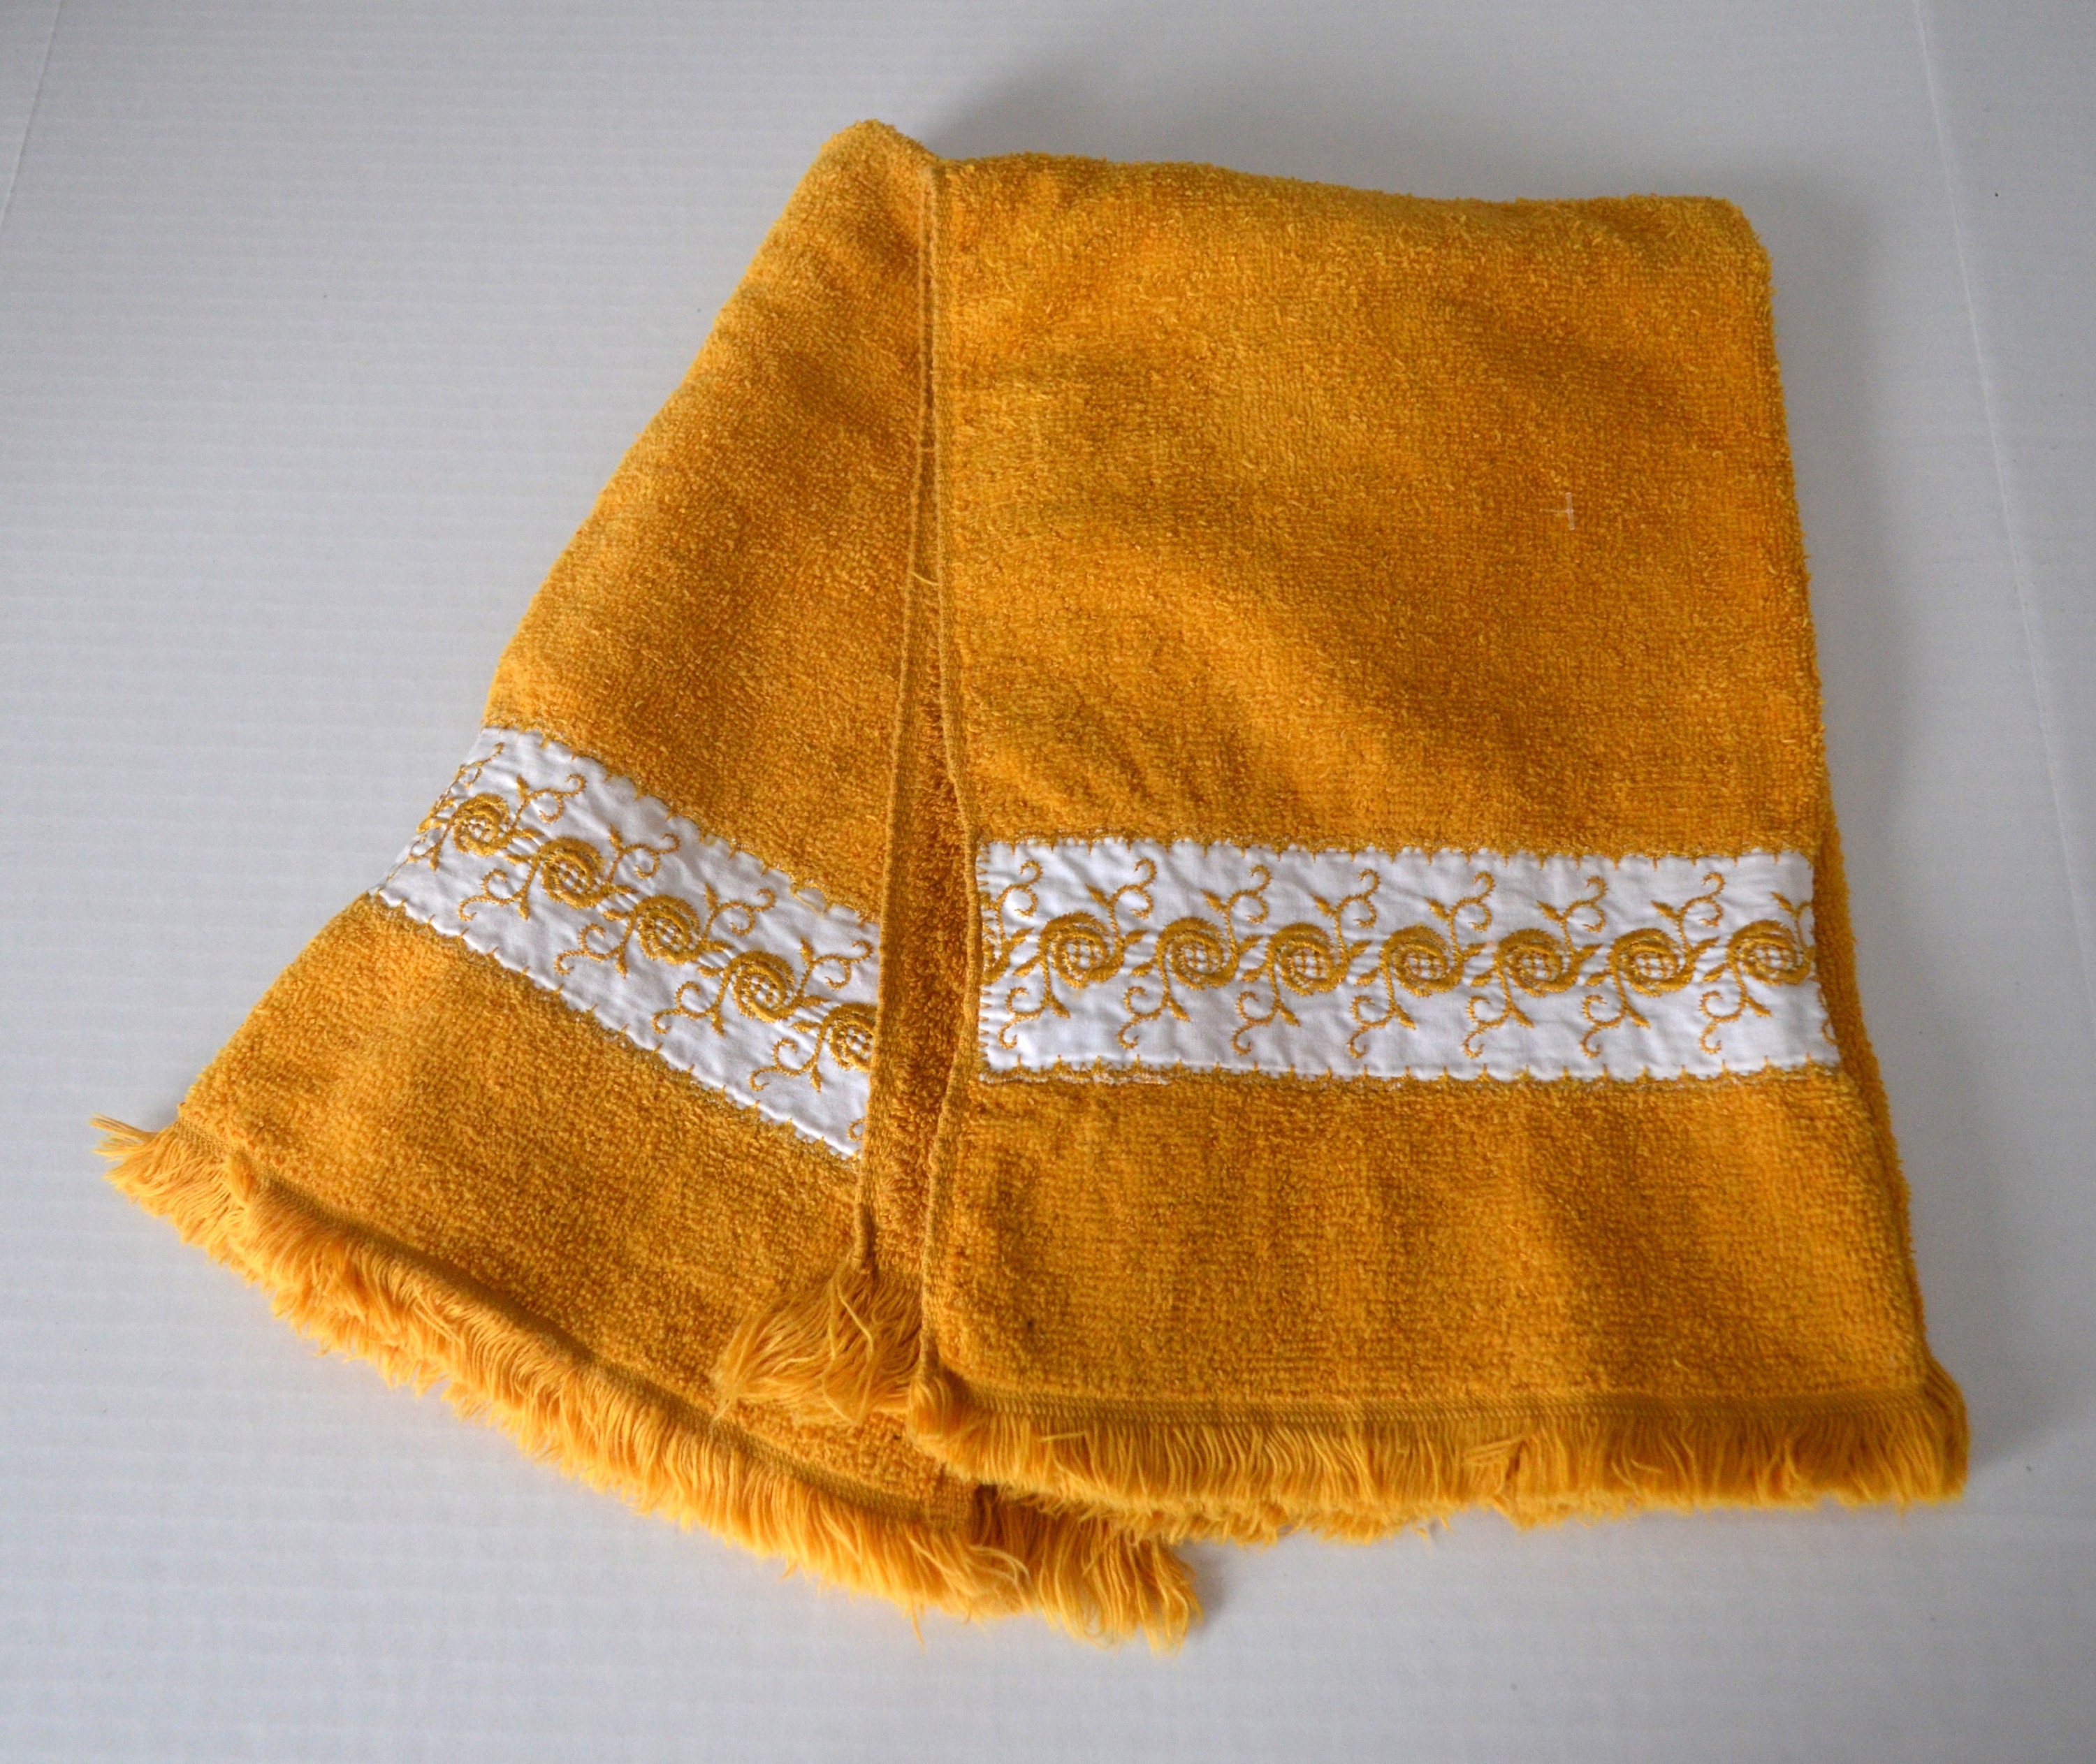 Wamsutta Egyptian Cotton Hand Towel - Petal Pink 1 ct